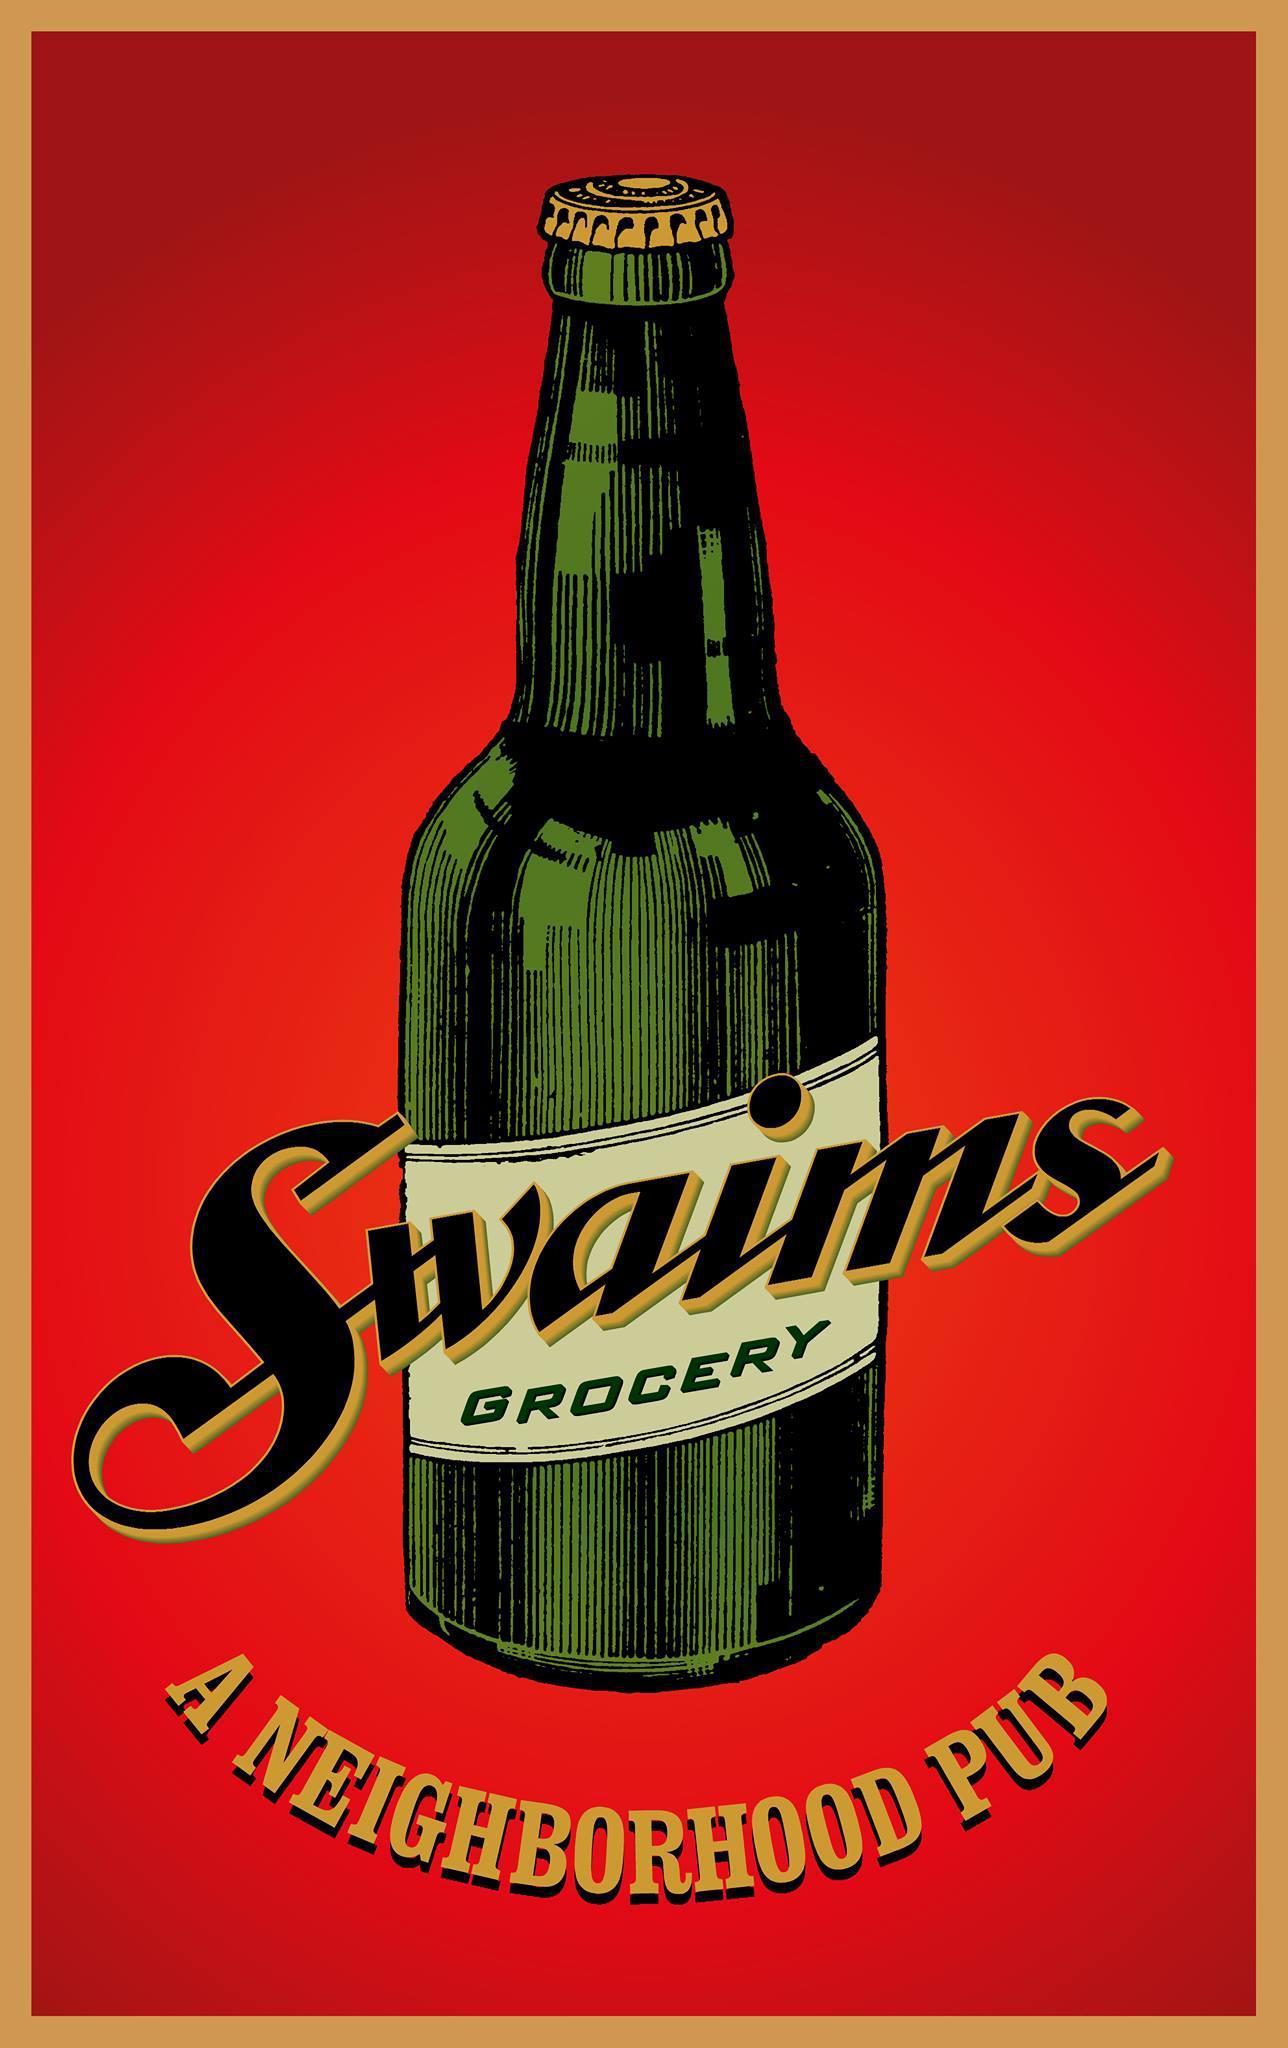 Swaims Grocery logo